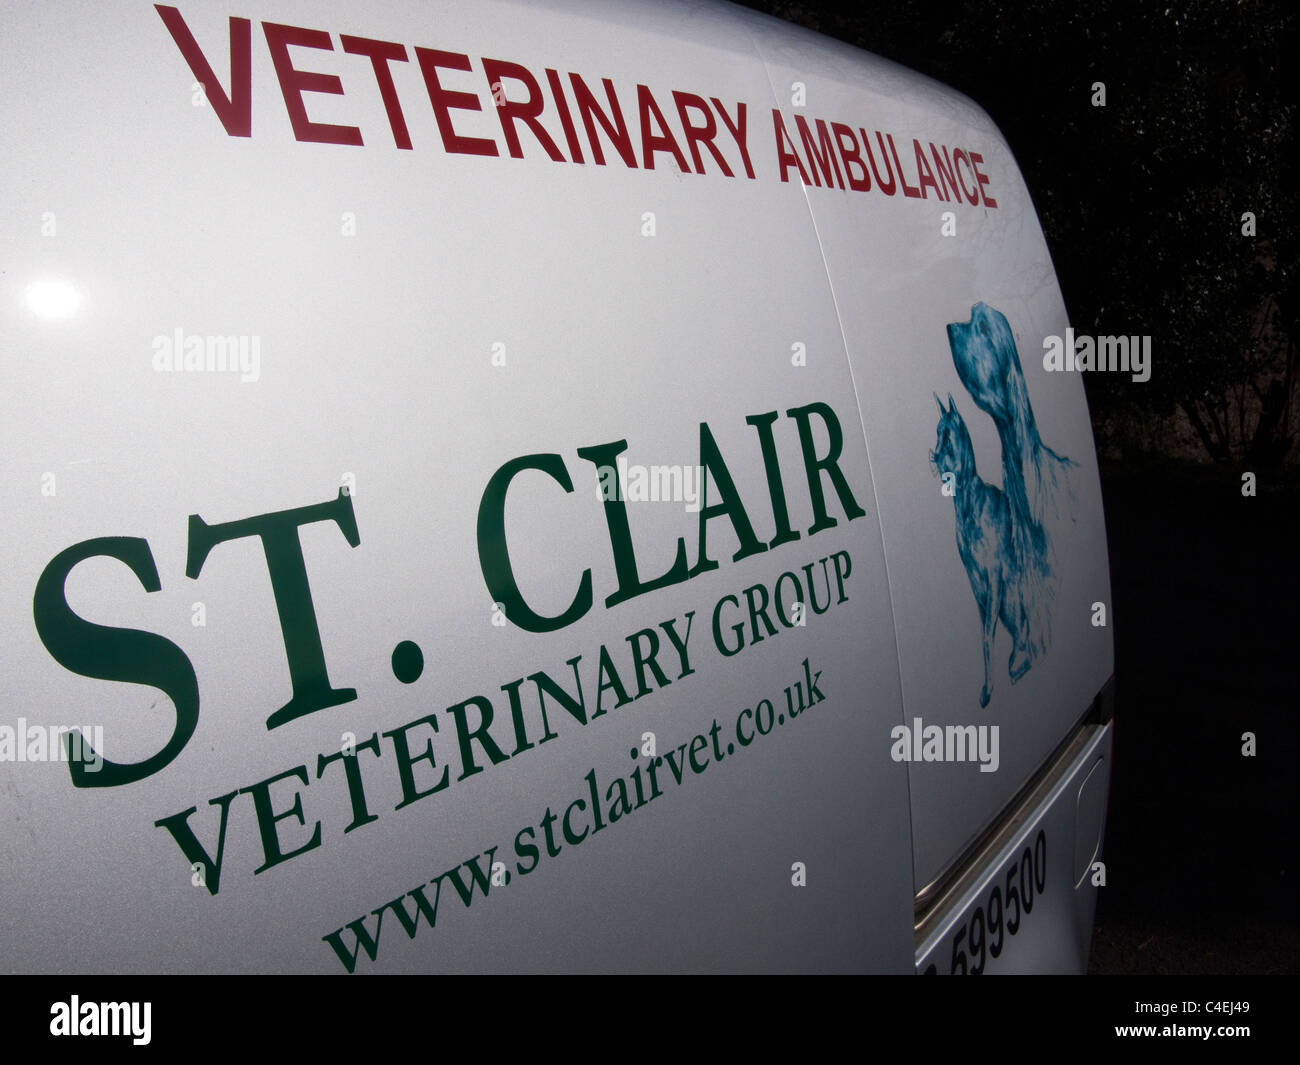 Veterinary Ambulance Stock Photo